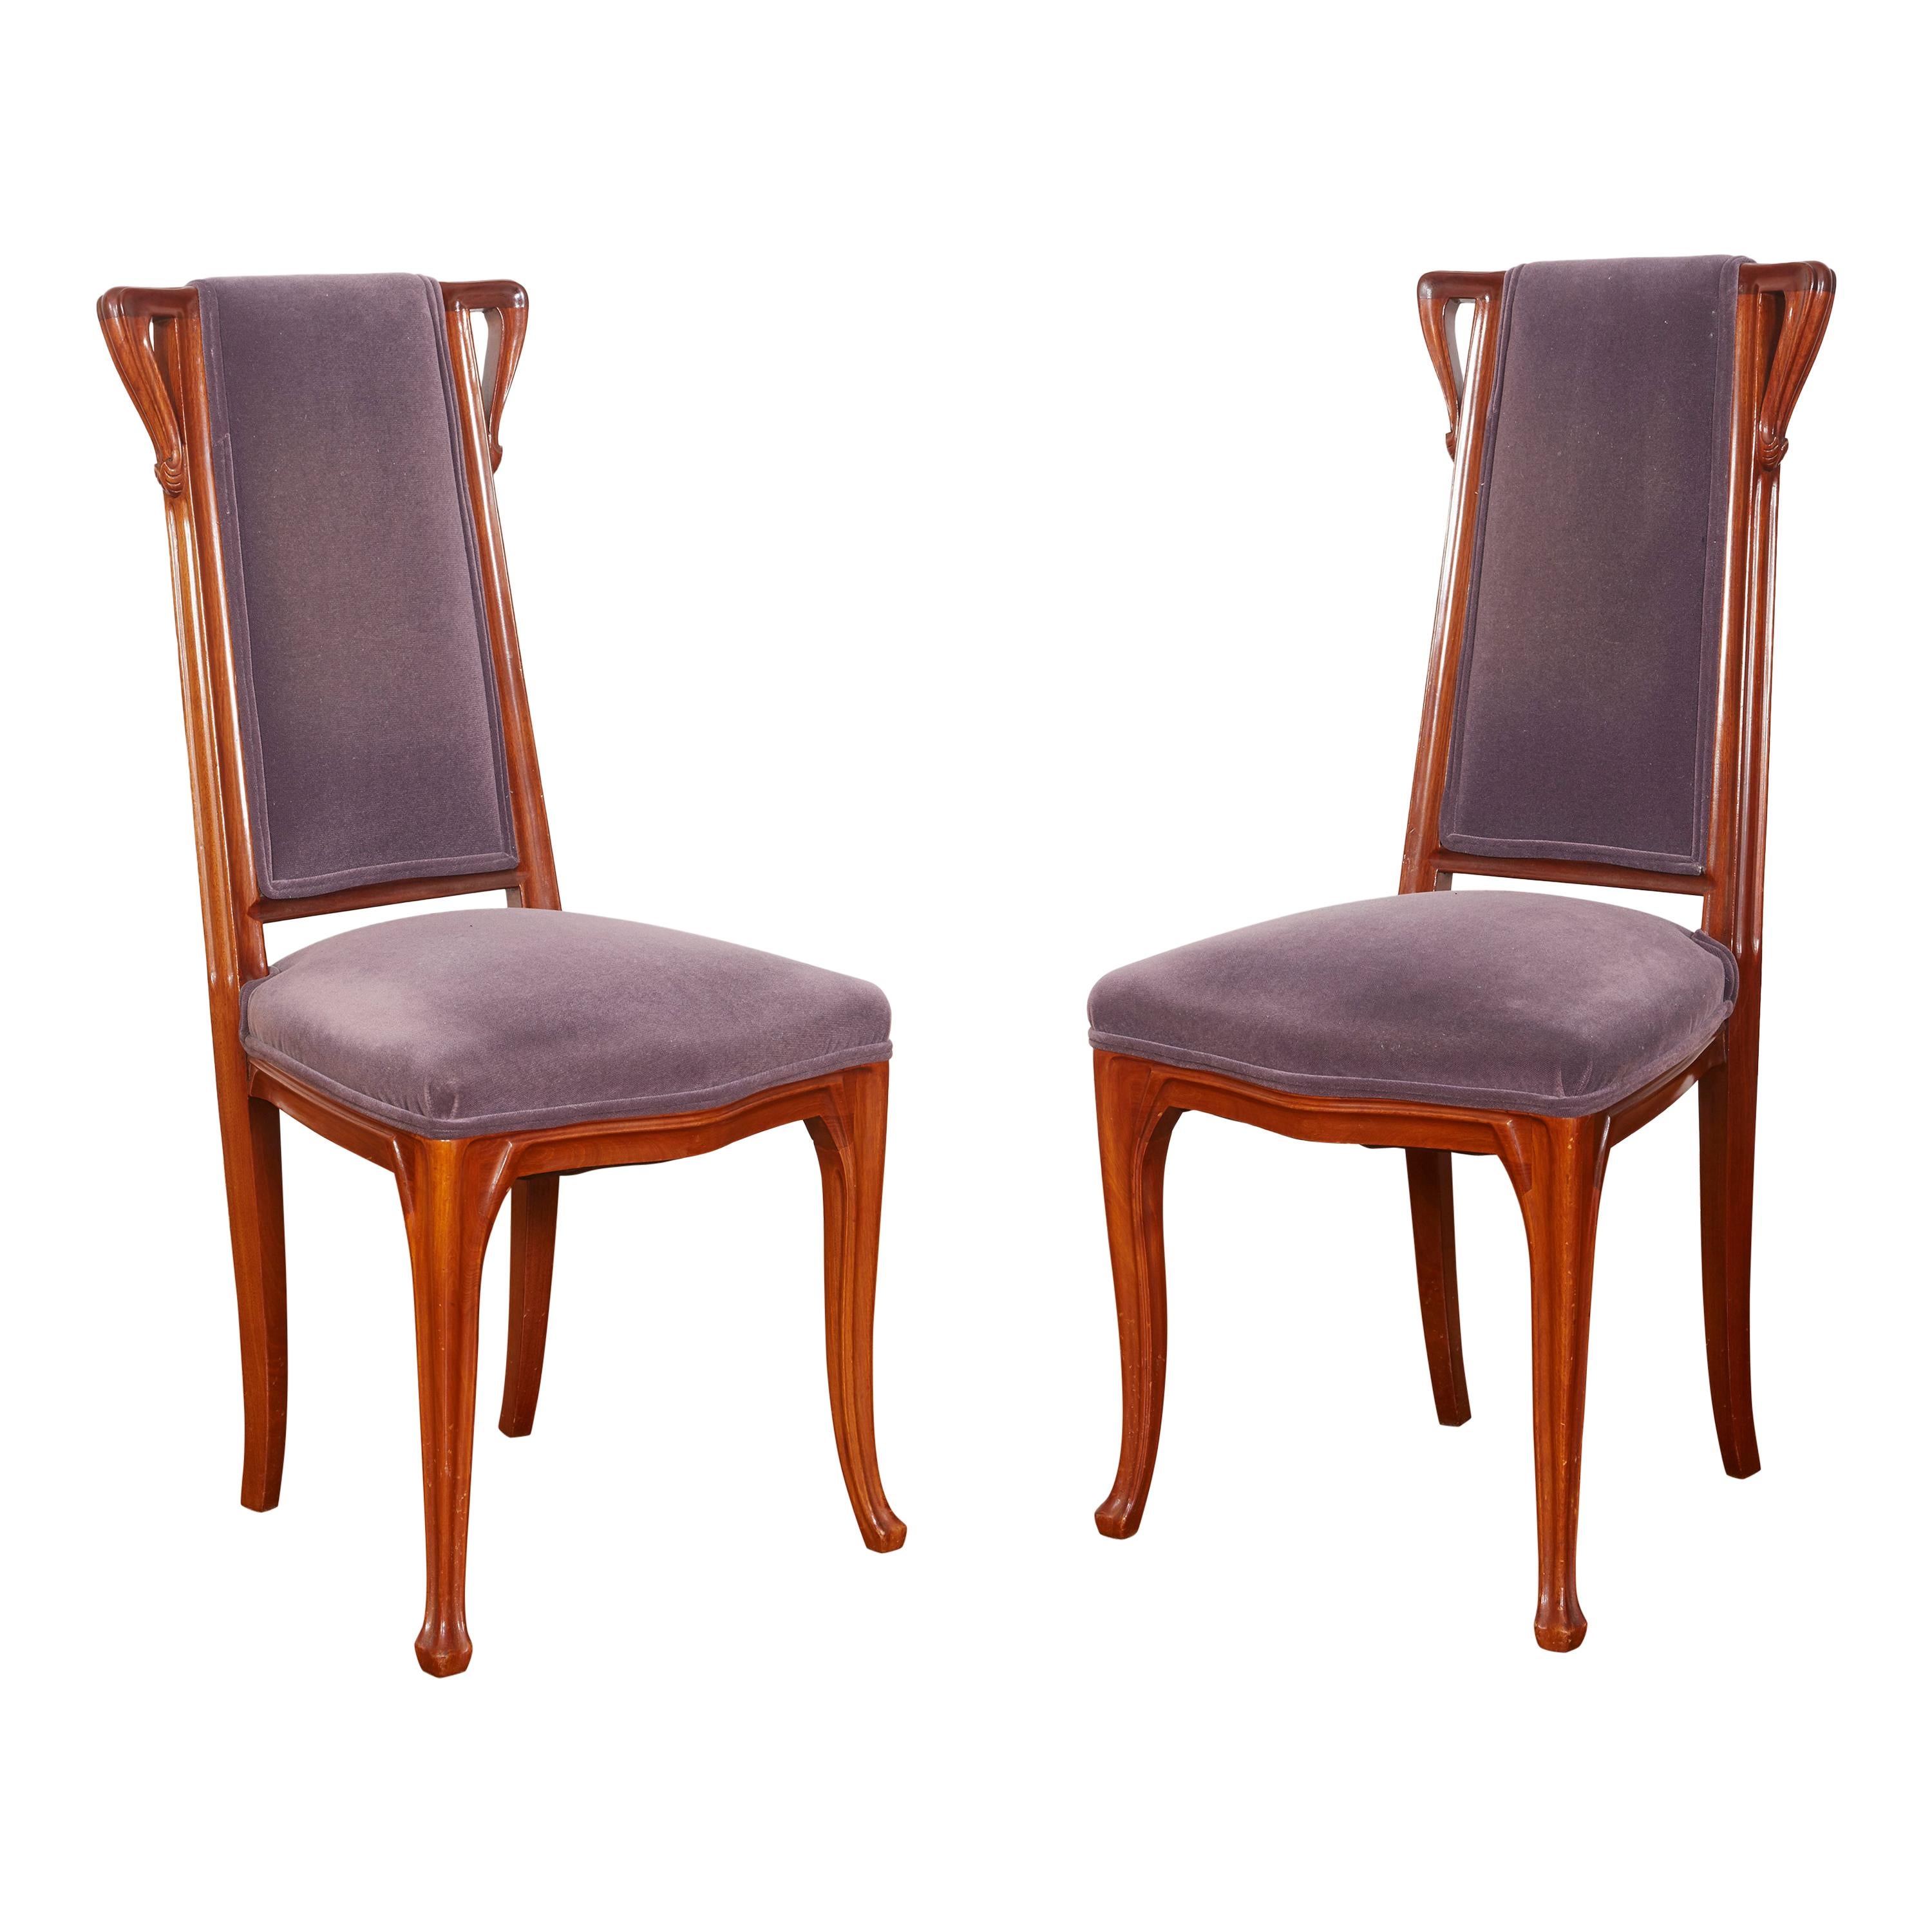 French Art Nouveau Pair of Louis Majorelle Chairs For Sale